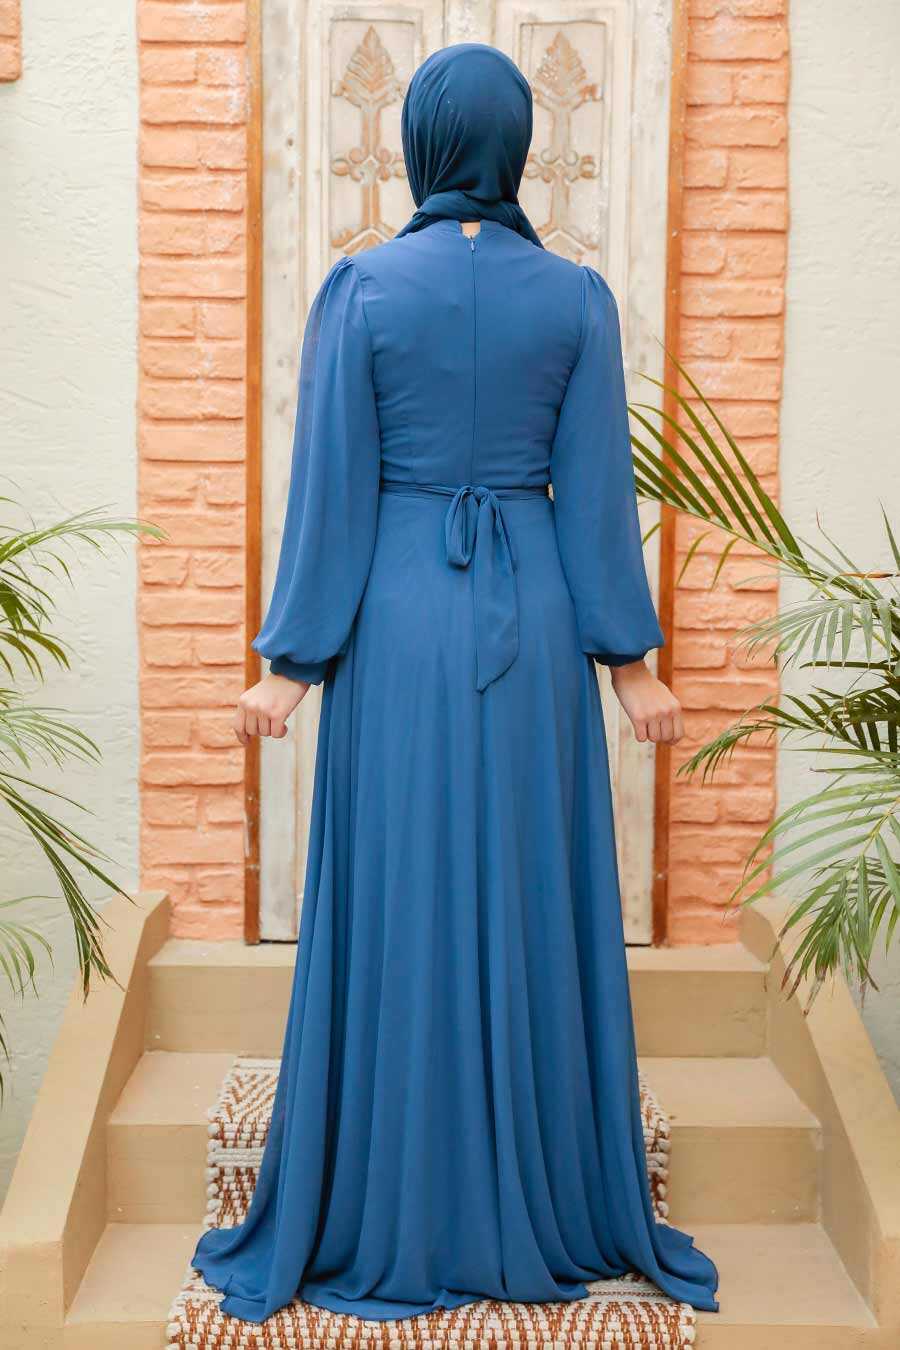 İndigo Blue Hijab Evening Dress 5470IM